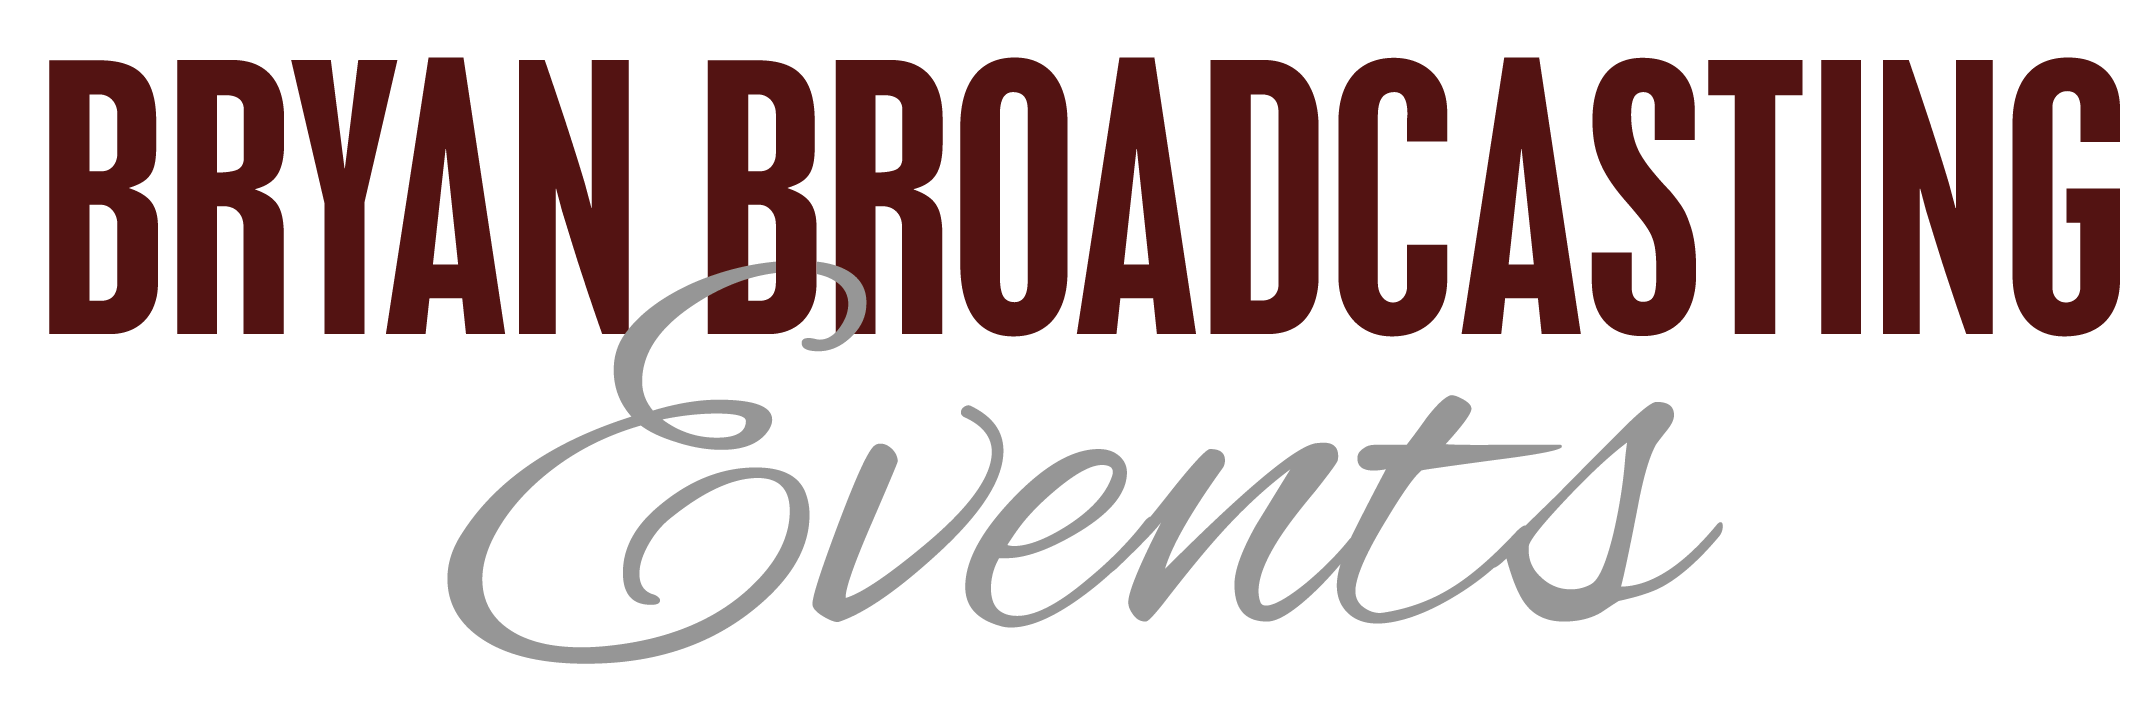 bryan broadcasting events logo